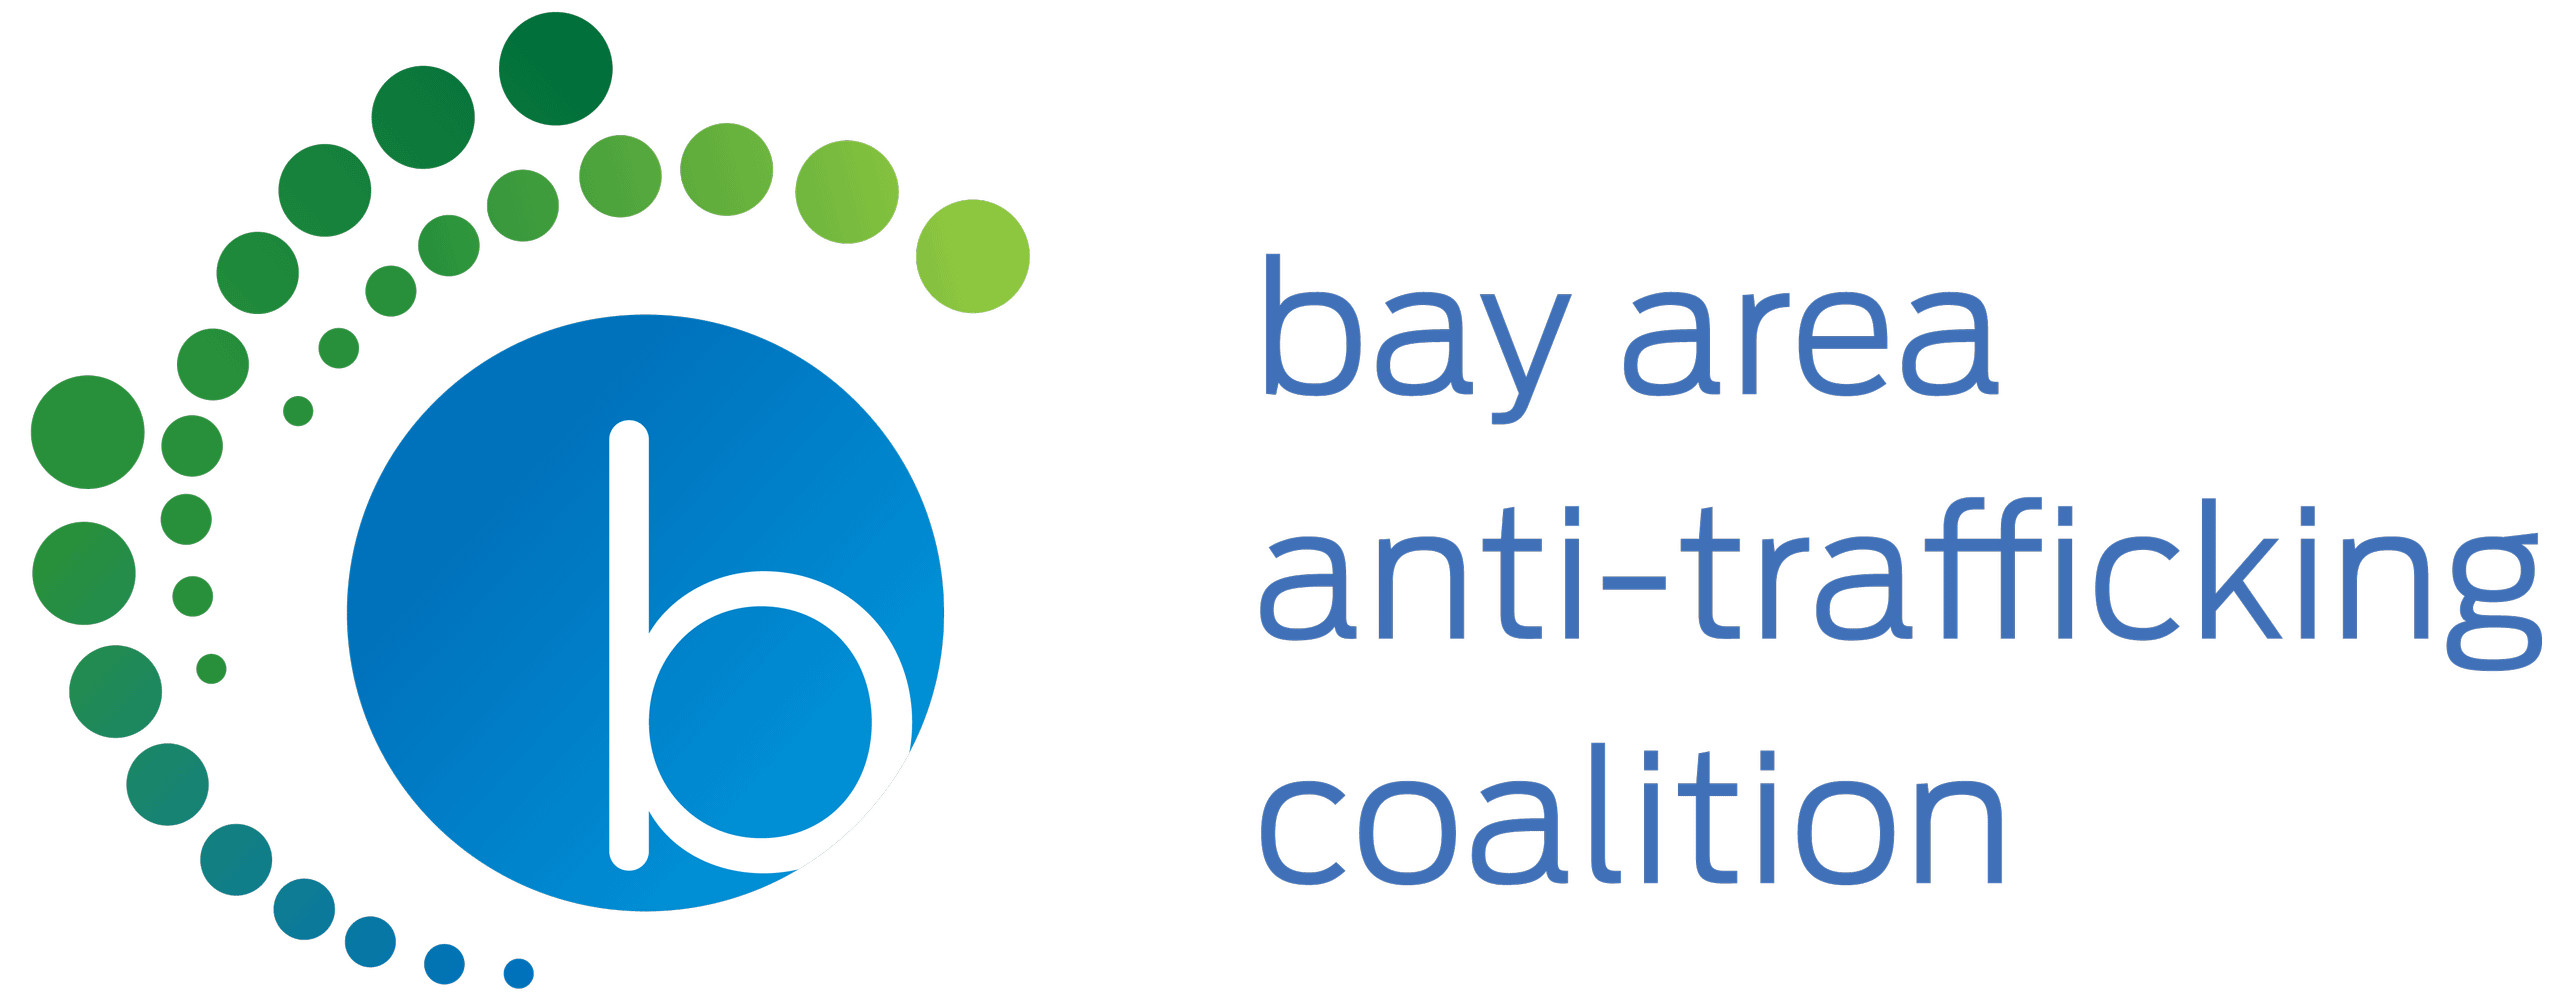 bay area anti-trafficking coalition